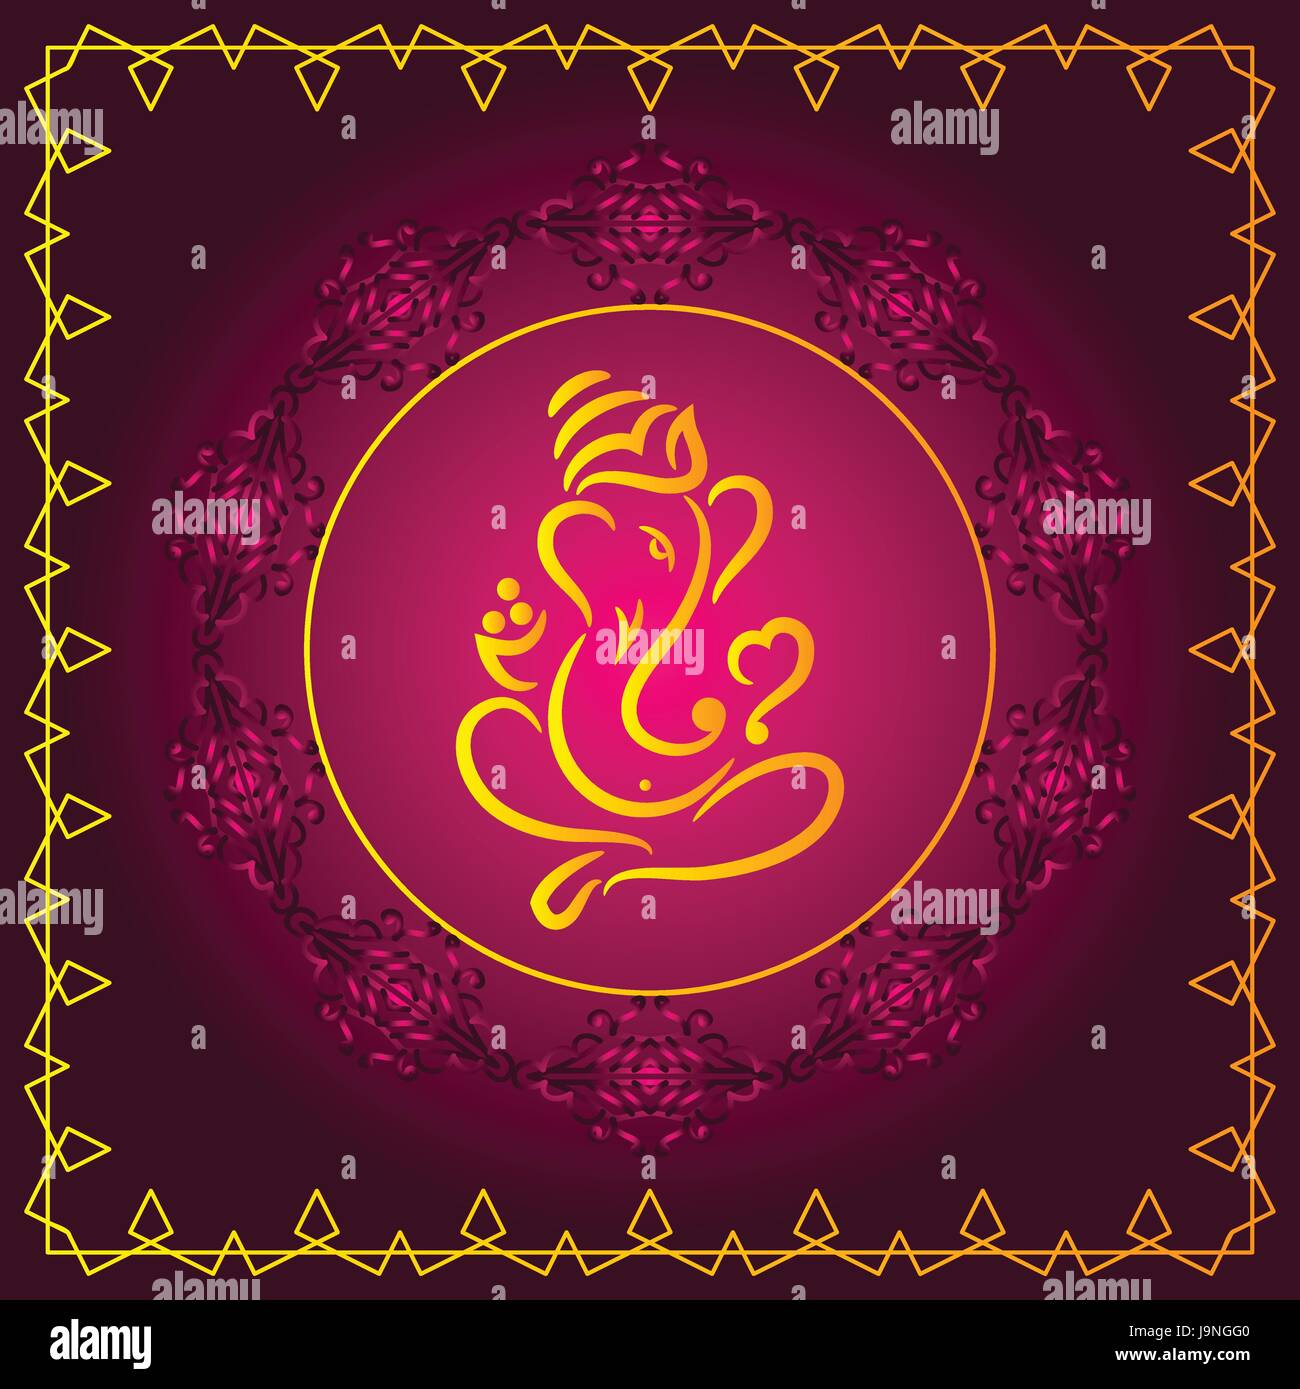 Ganesha The Lord Of Wisdom Vector Art Stock Vector Image & Art - Alamy